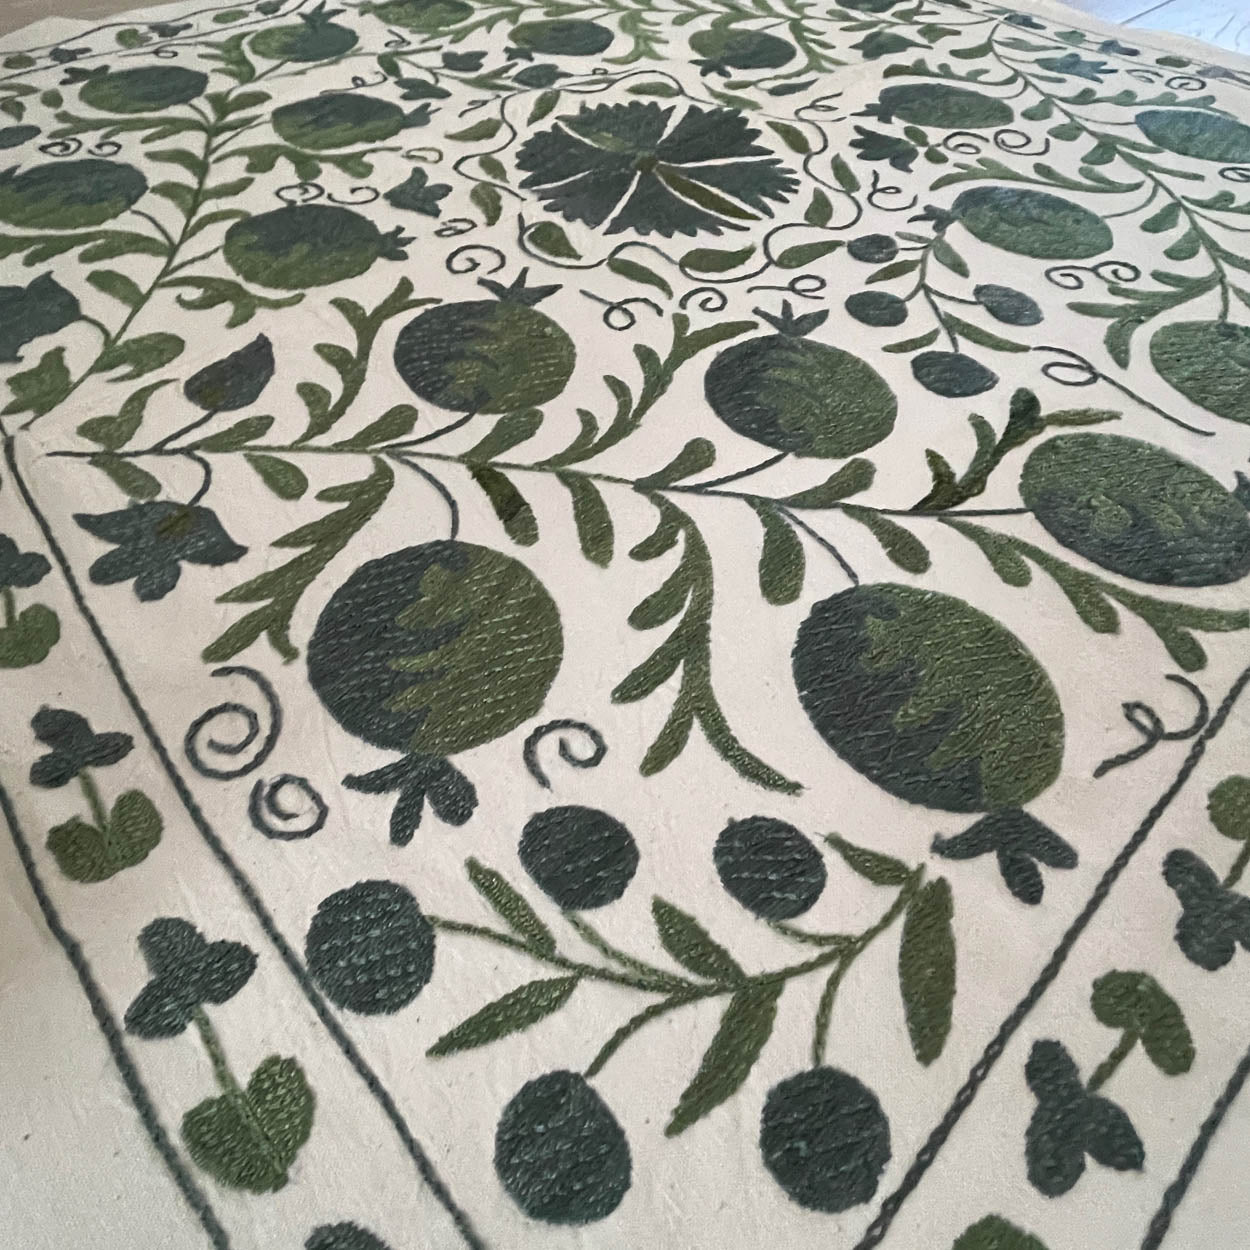 Uzbeki Suzani Hand Embroidered Textile Wall Hanging | Home Décor | Runner | 100cm x 100cm SUZ220518017 - Wildash London